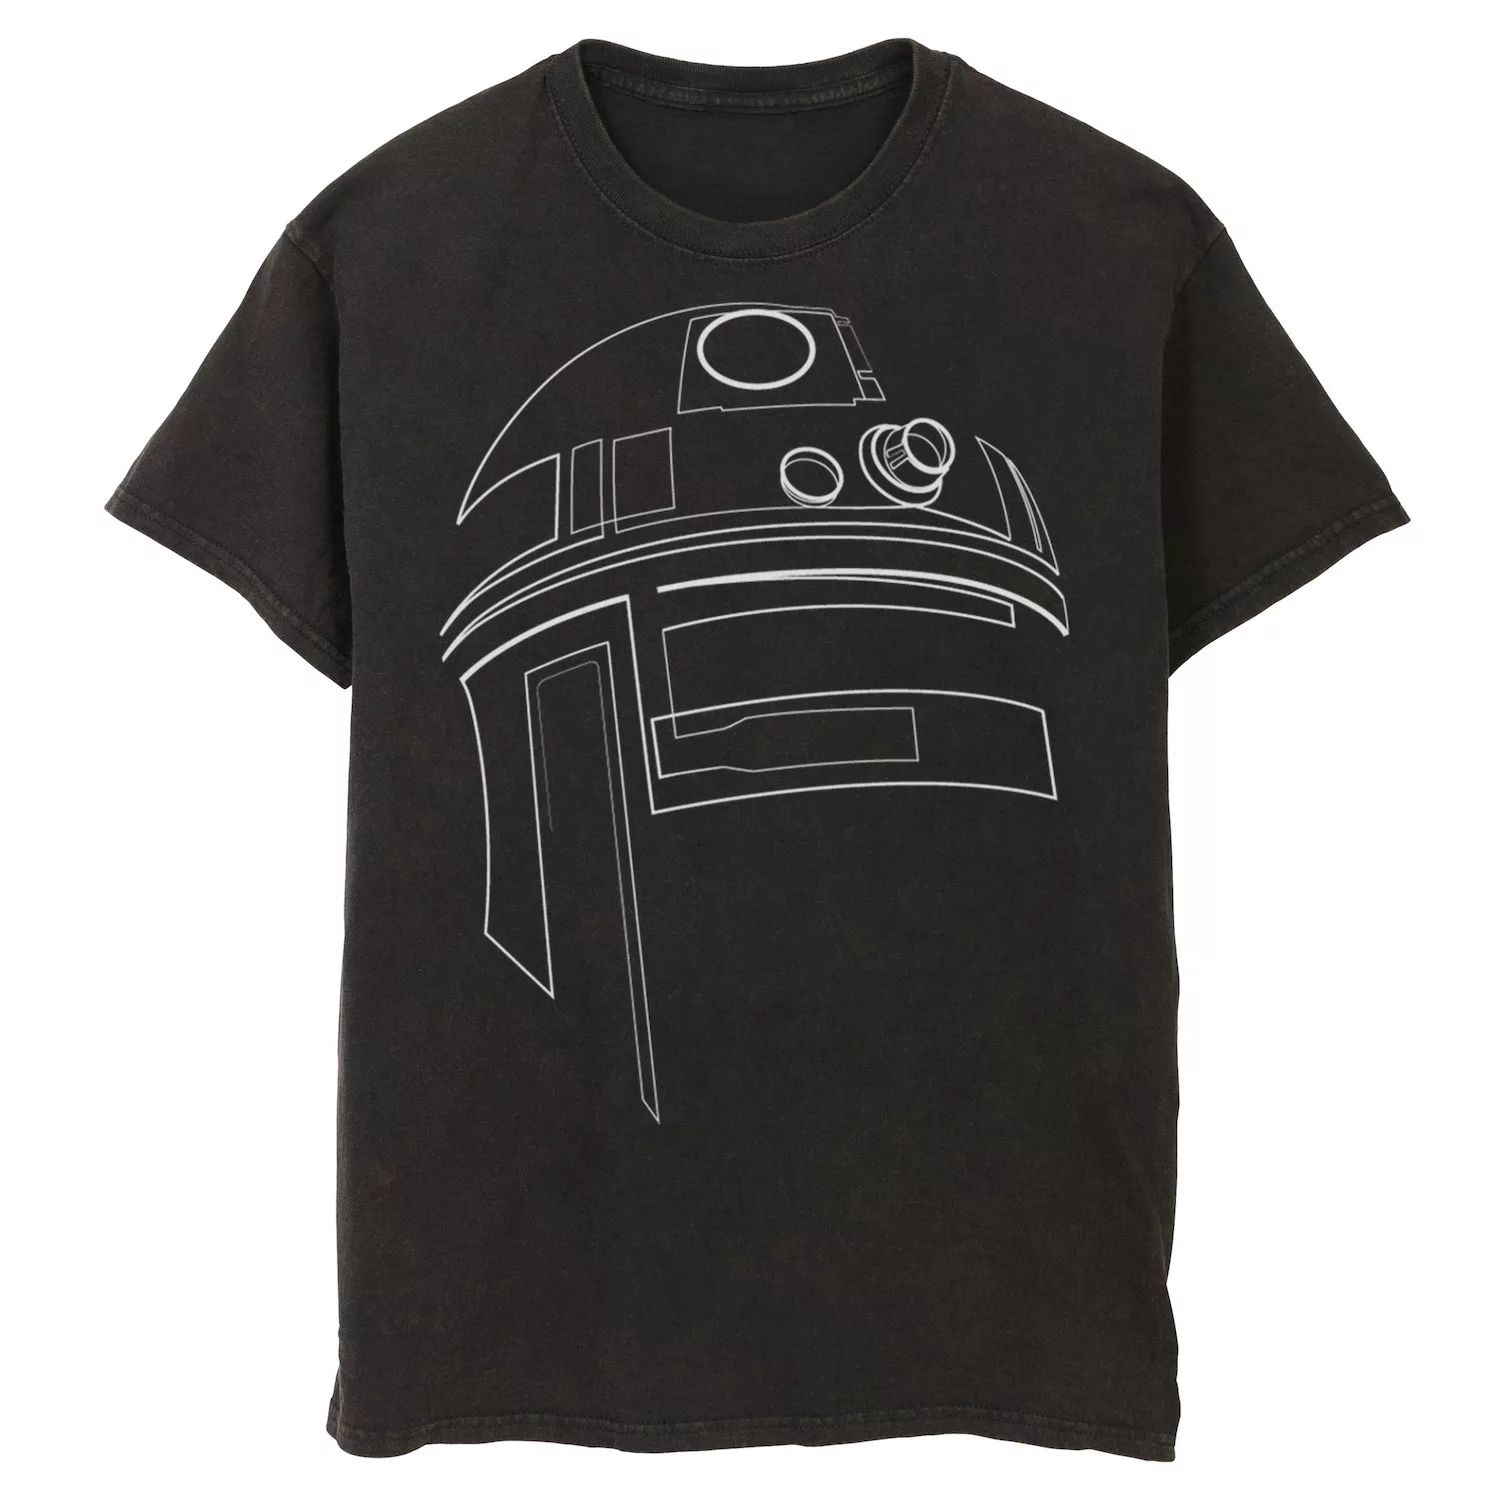 Мужская футболка с контуром R2-D2 Star Wars